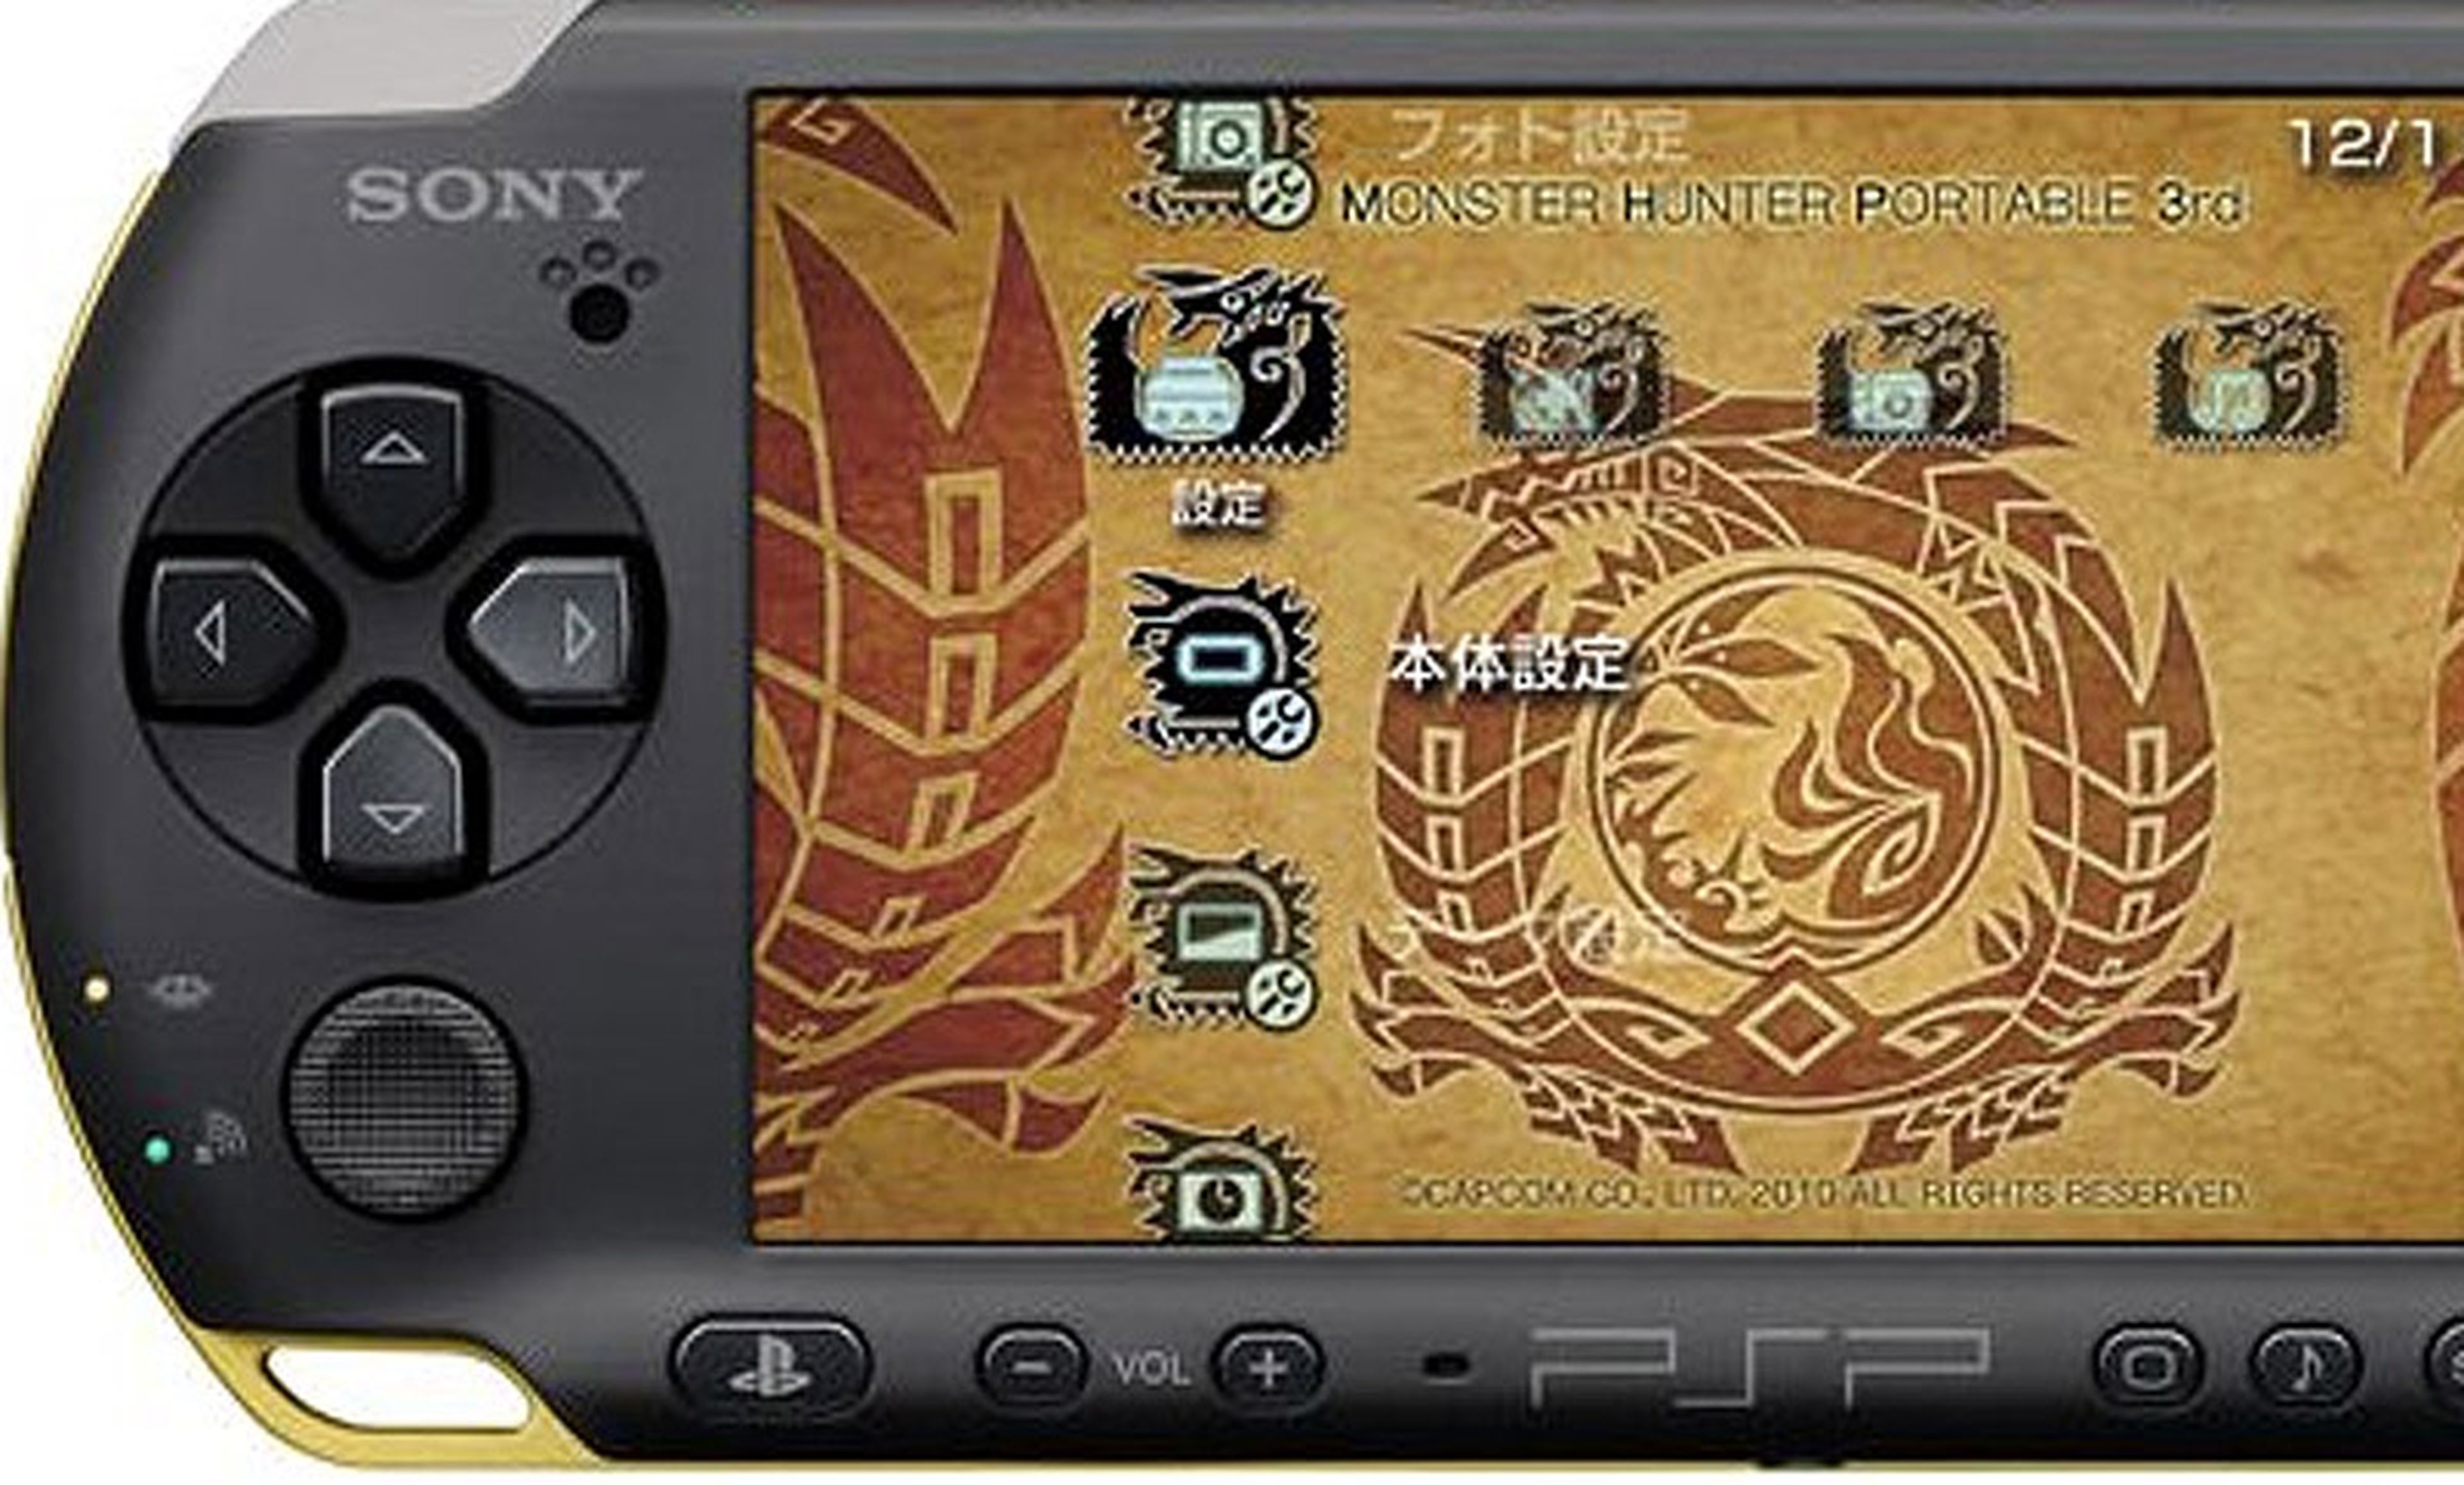 Nueva PSP edición Monster Hunter